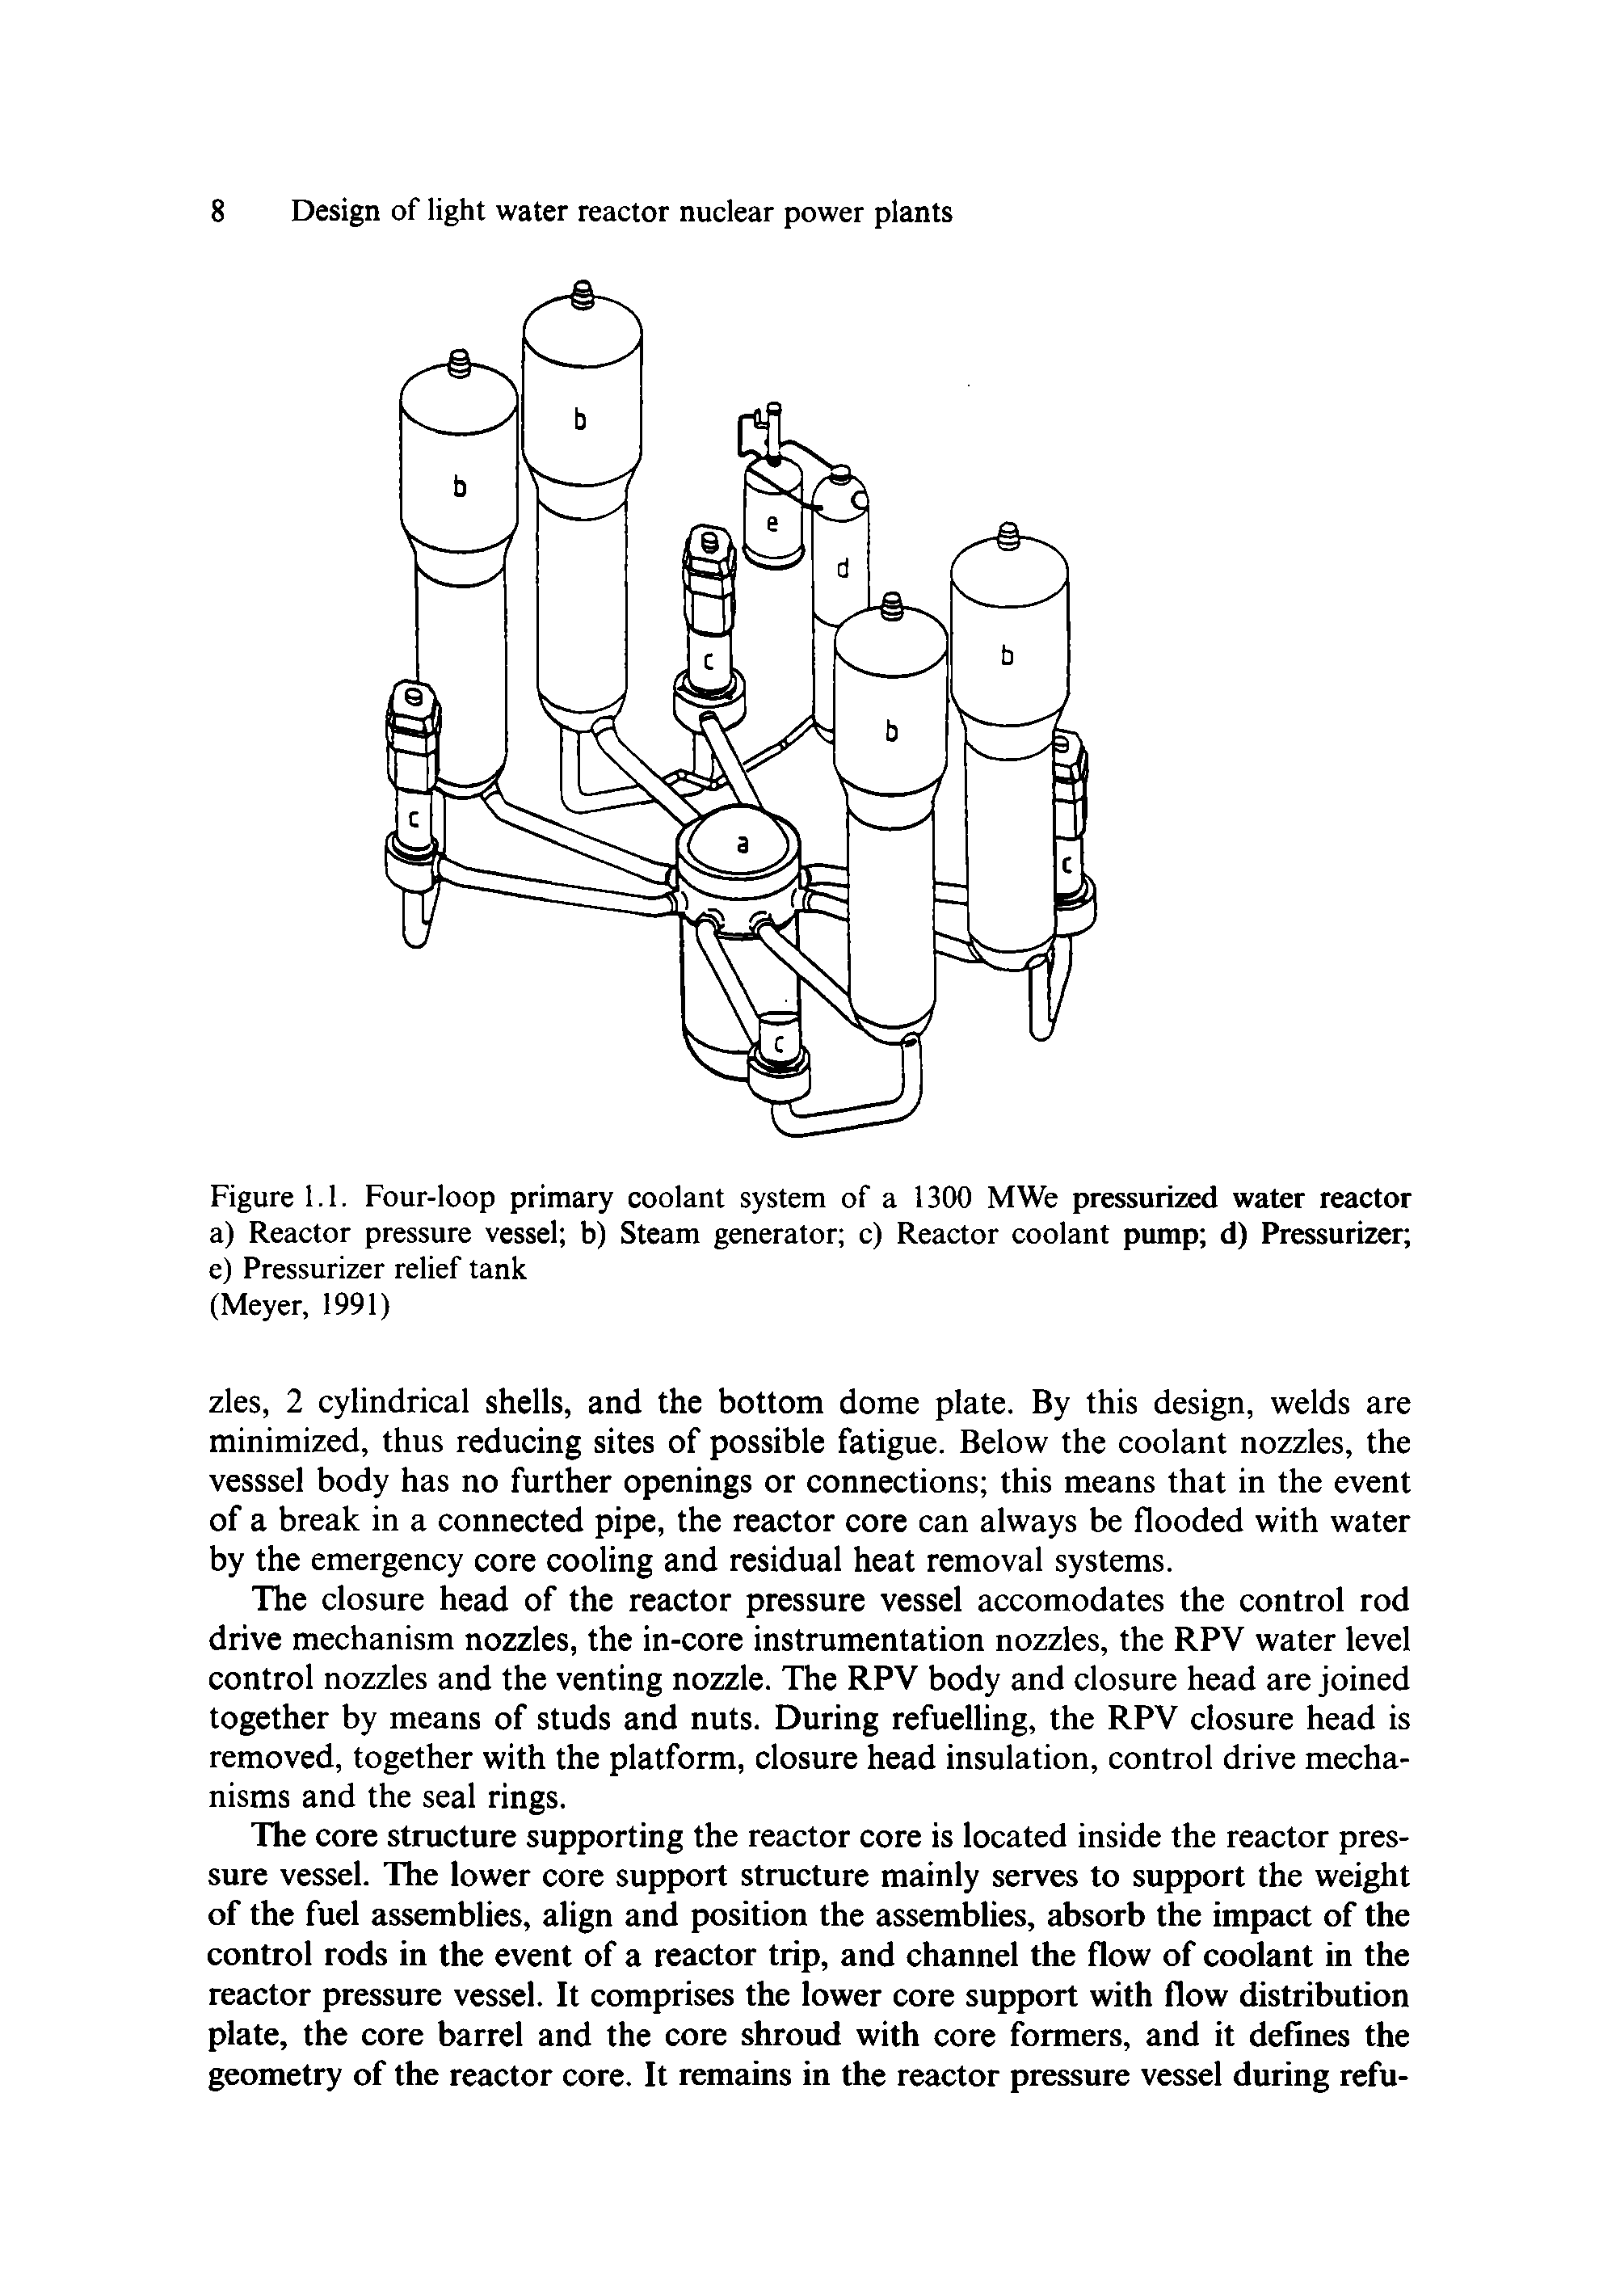 Figure 1.1. Four-loop primary coolant system of a 1300 MWe pressurized water reactor a) Reactor pressure vessel b) Steam generator c) Reactor coolant pump d) Pressurizer e) Pressurizer relief tank (Meyer, 1991)...